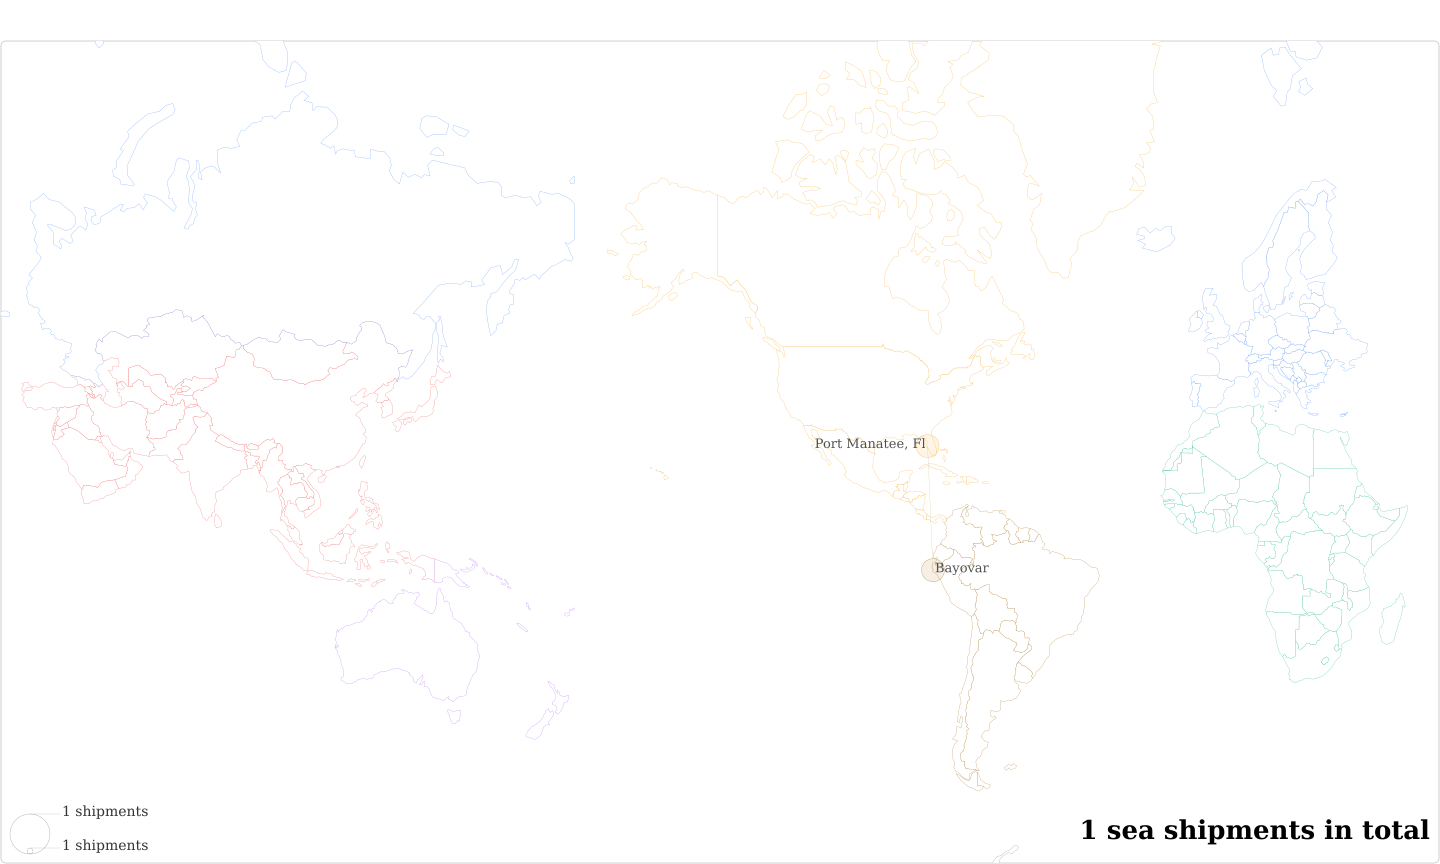 Compania Minera Miski Mayo Sri's Imports Per Country Map